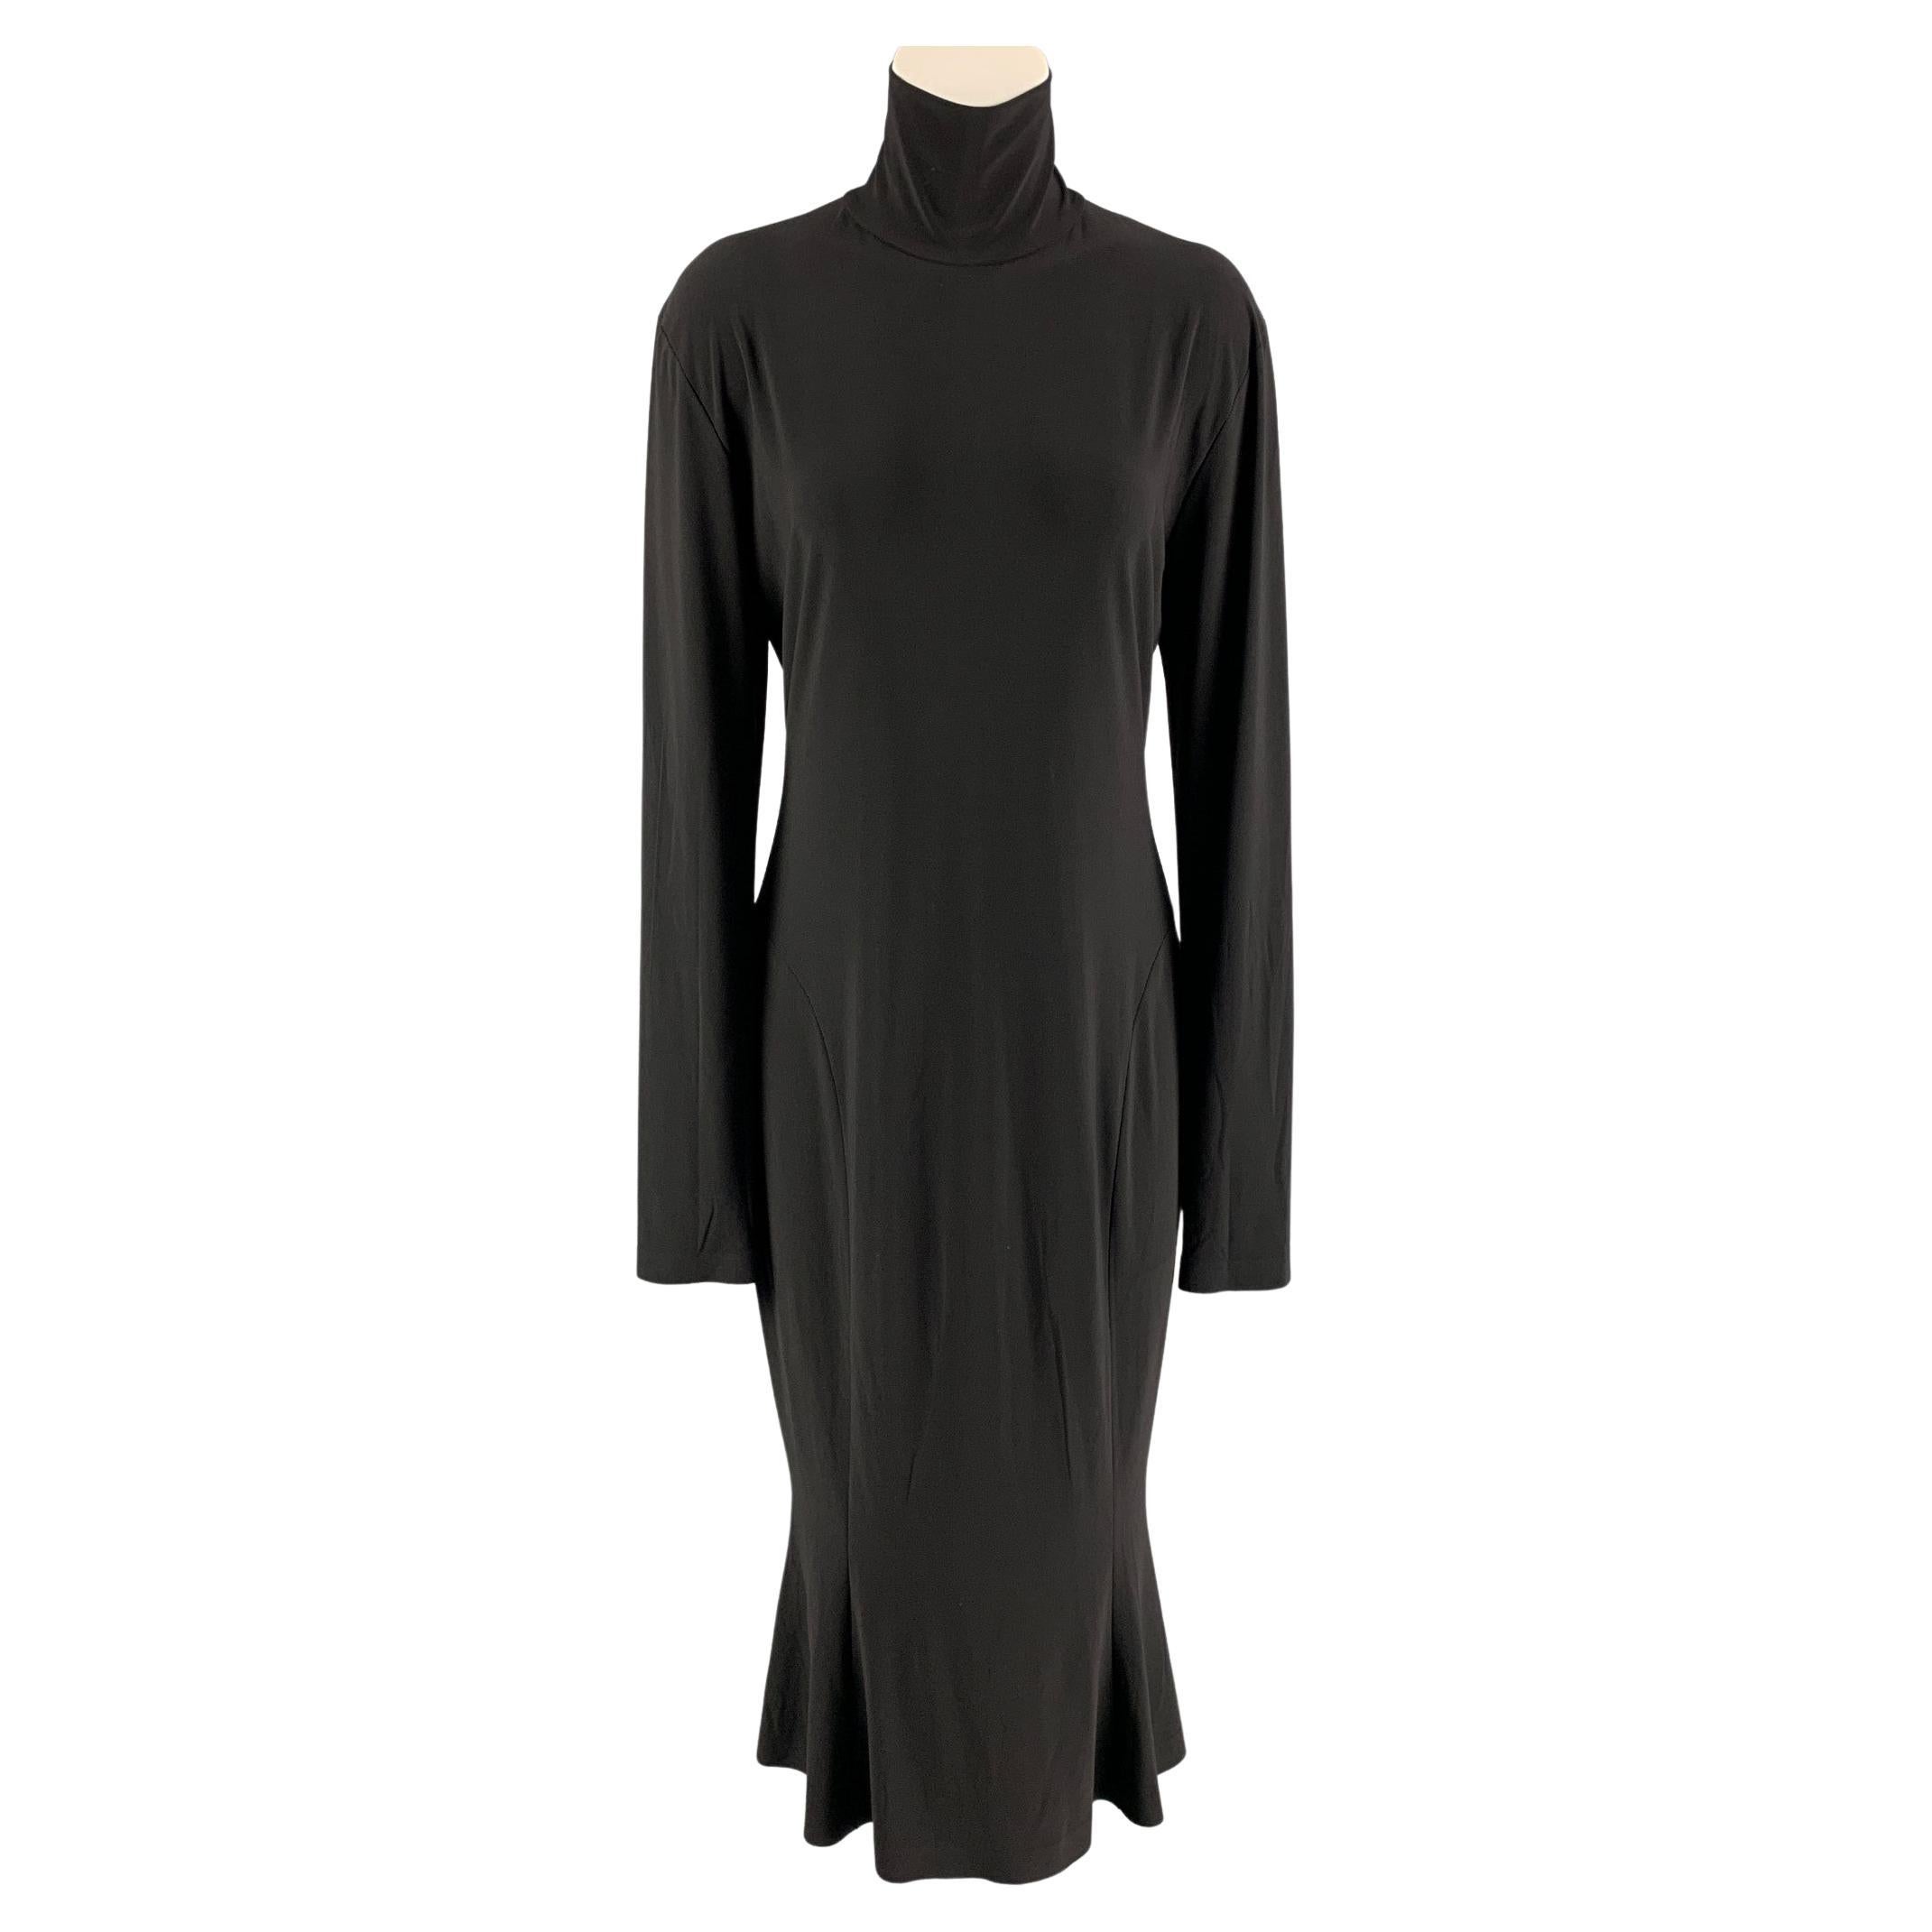 NORMA KAMALI Size L Black Polyester & Spandex Solid Dress